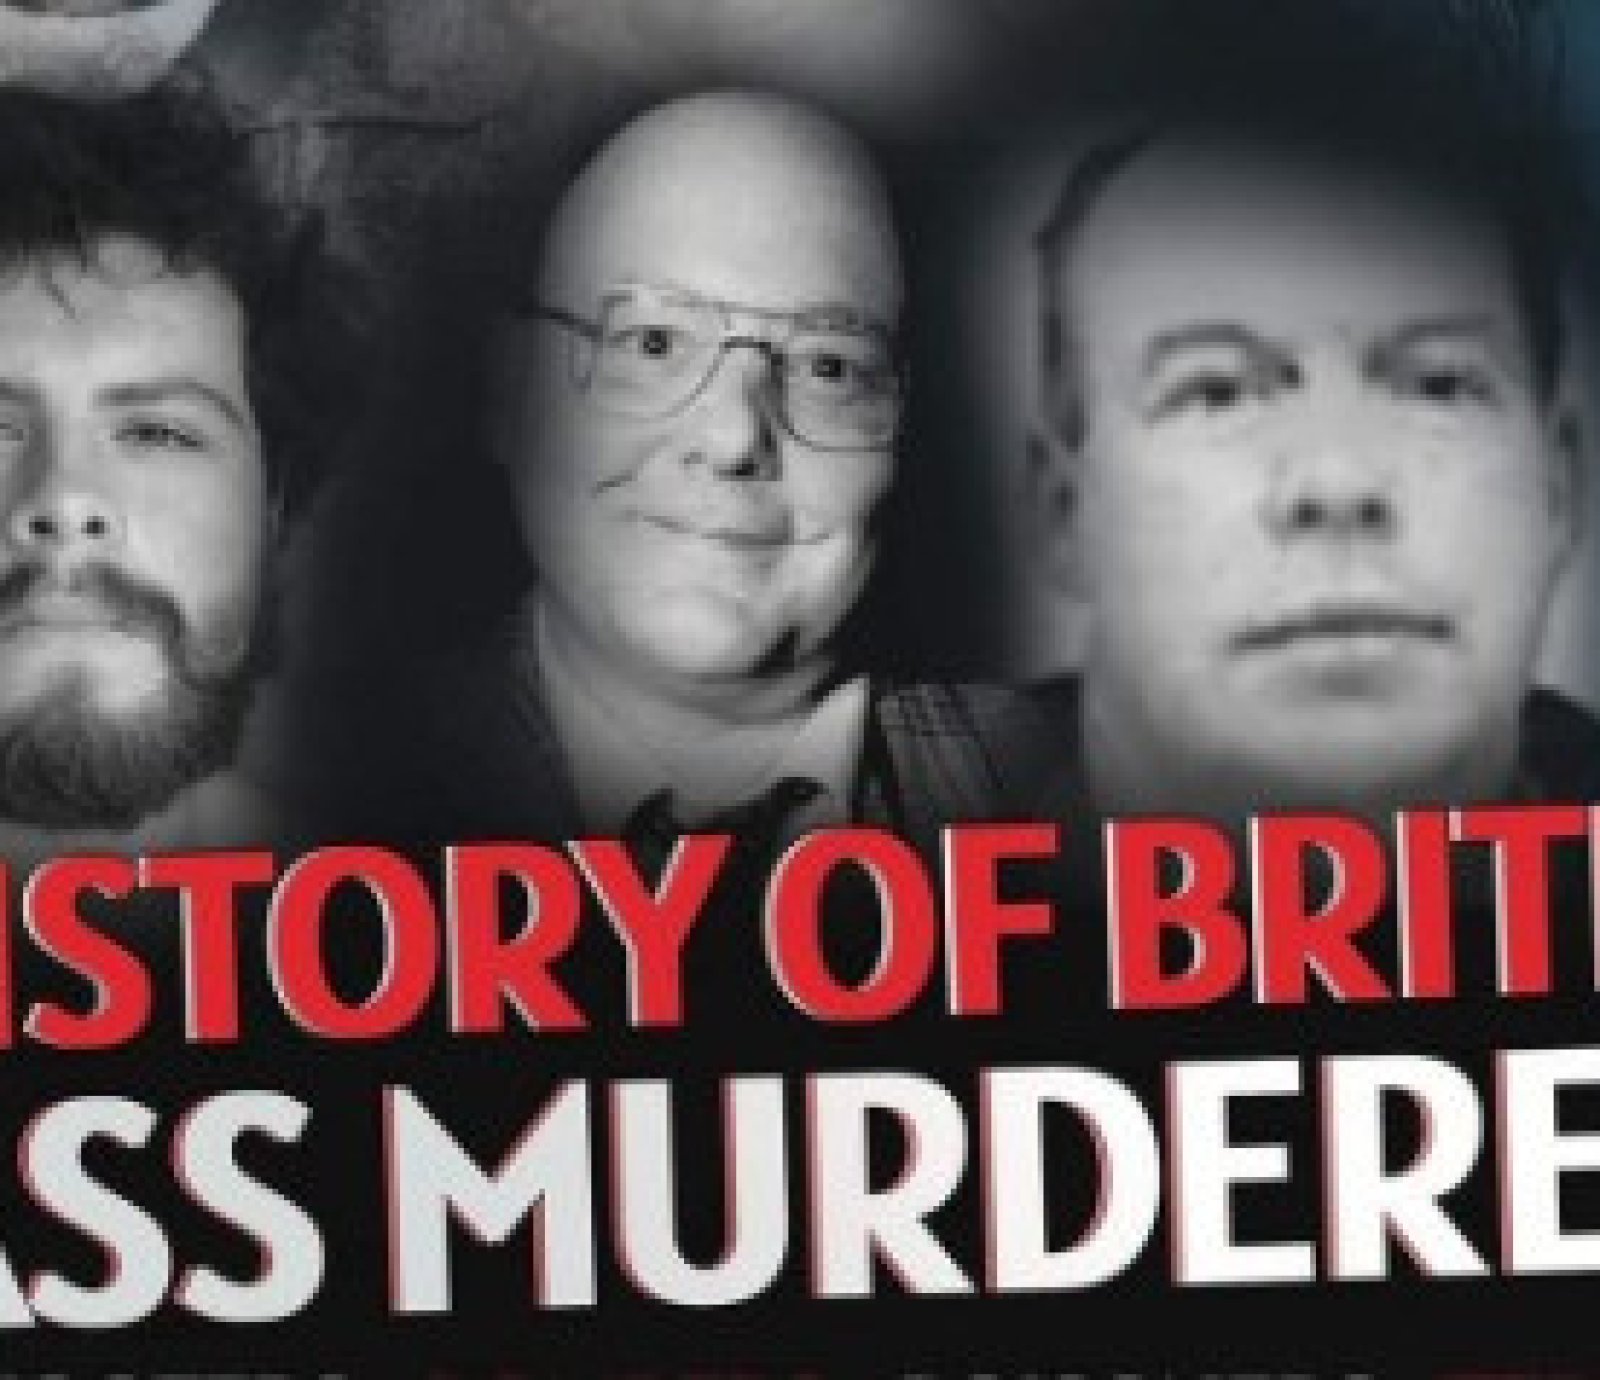 A History Of British Crime